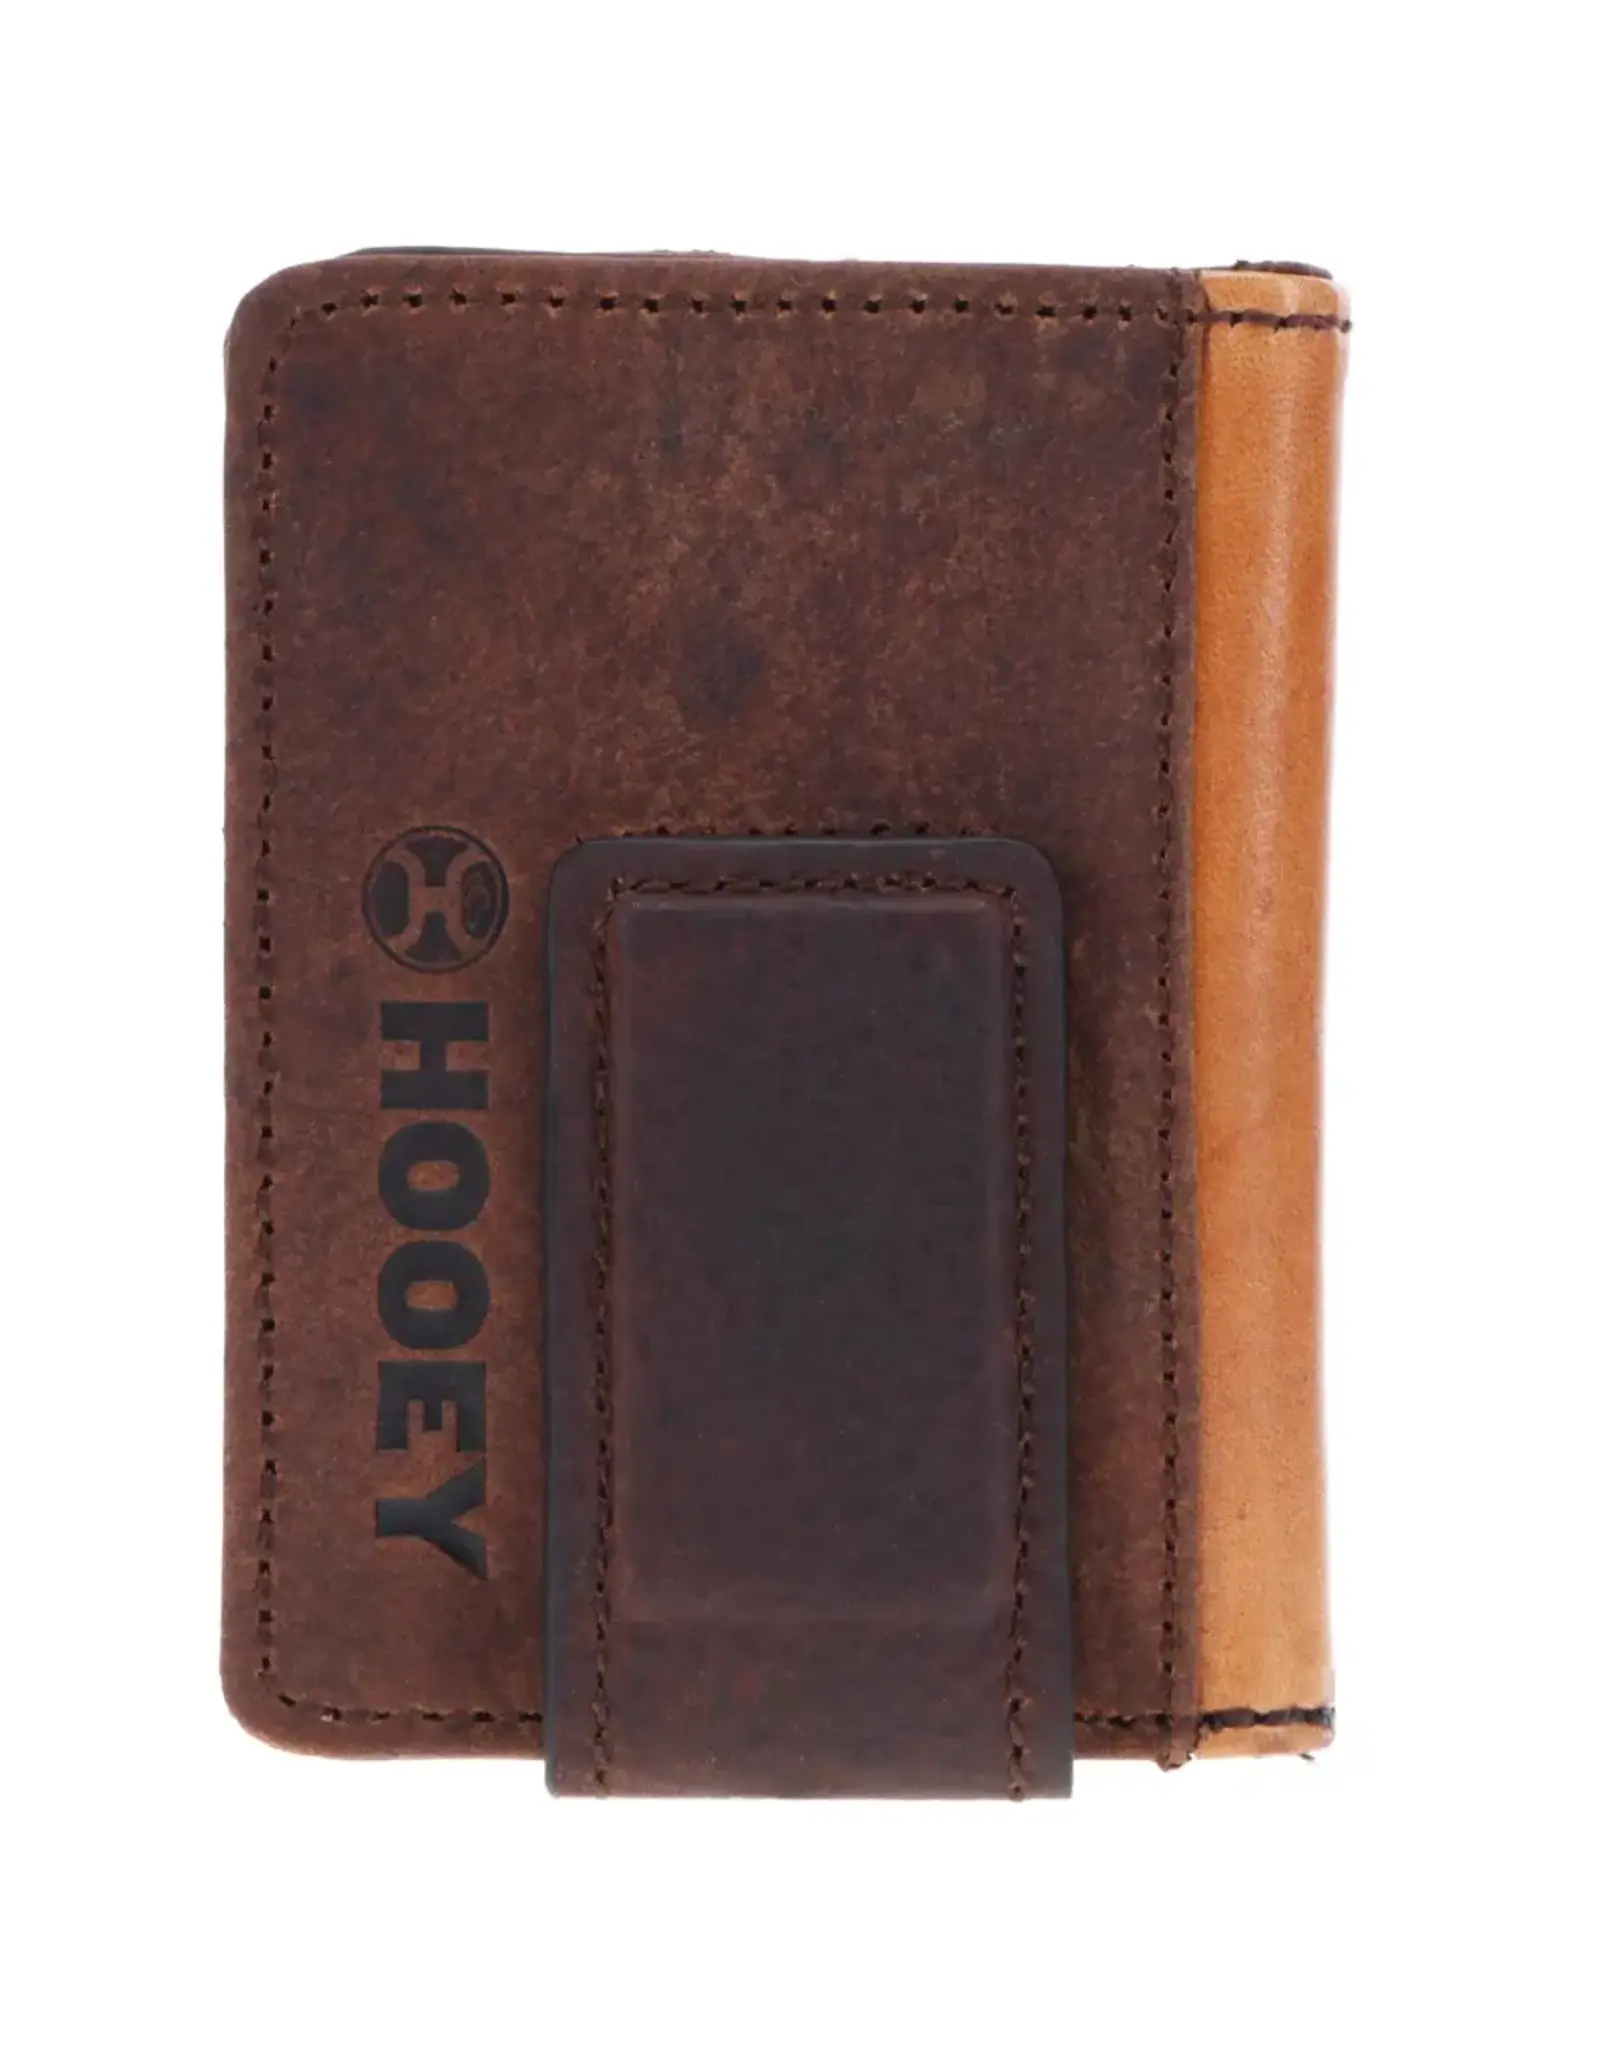 Hooey Brands "Grayson" Hooey Bifold Money Clip Wallet Brown/Tan Wallet